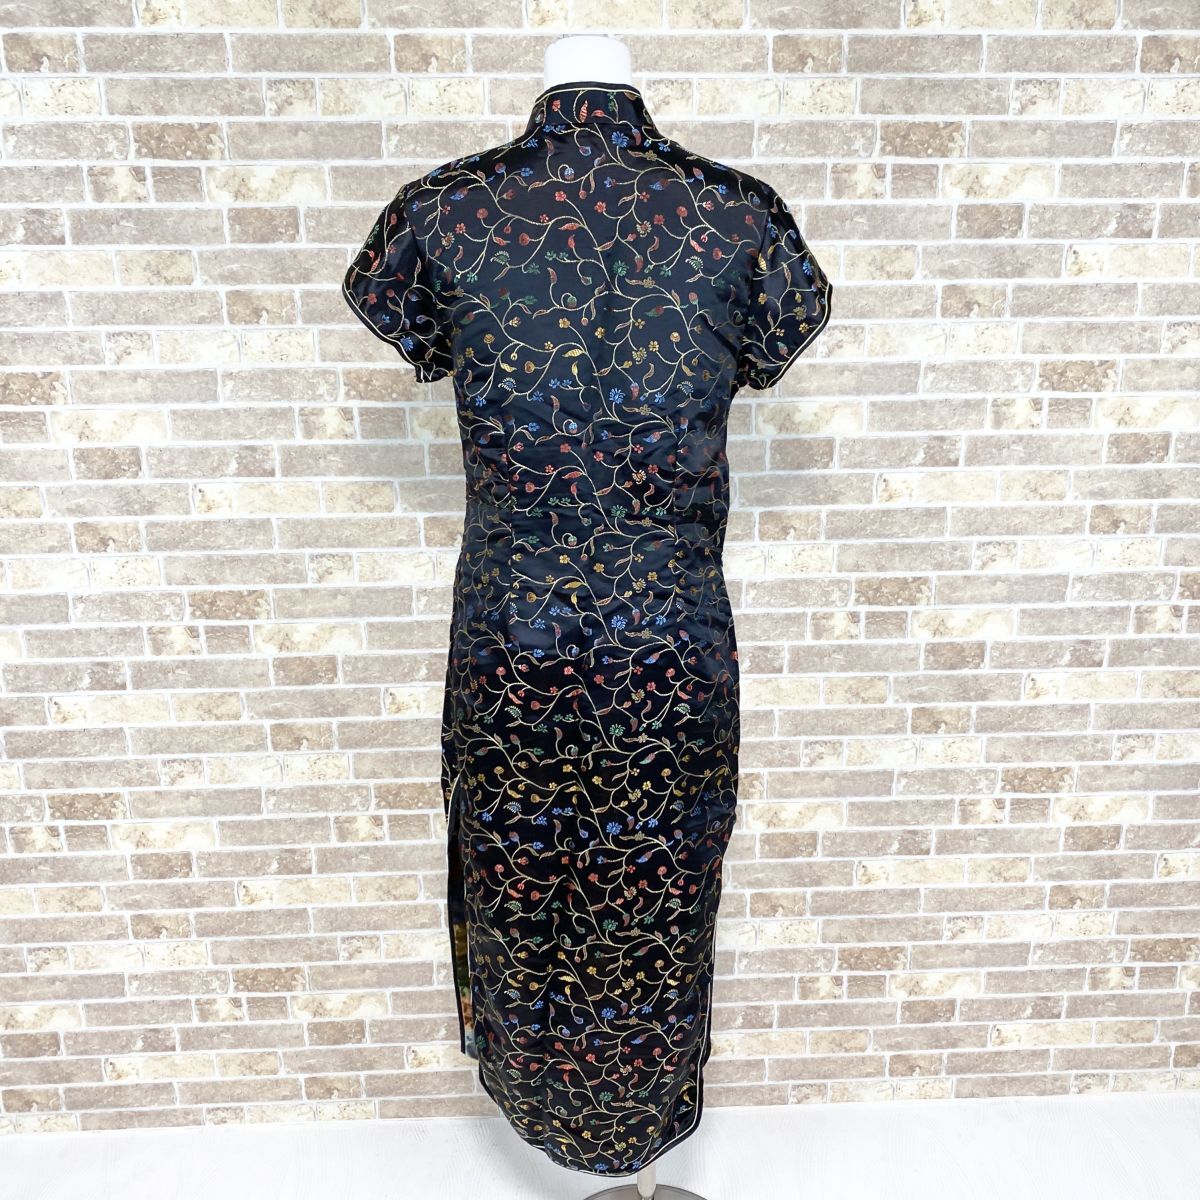 1 jpy China dress NIAOSHANG long One-piece XL largish size fastener defect black pattern color dress kyabadore used 3861